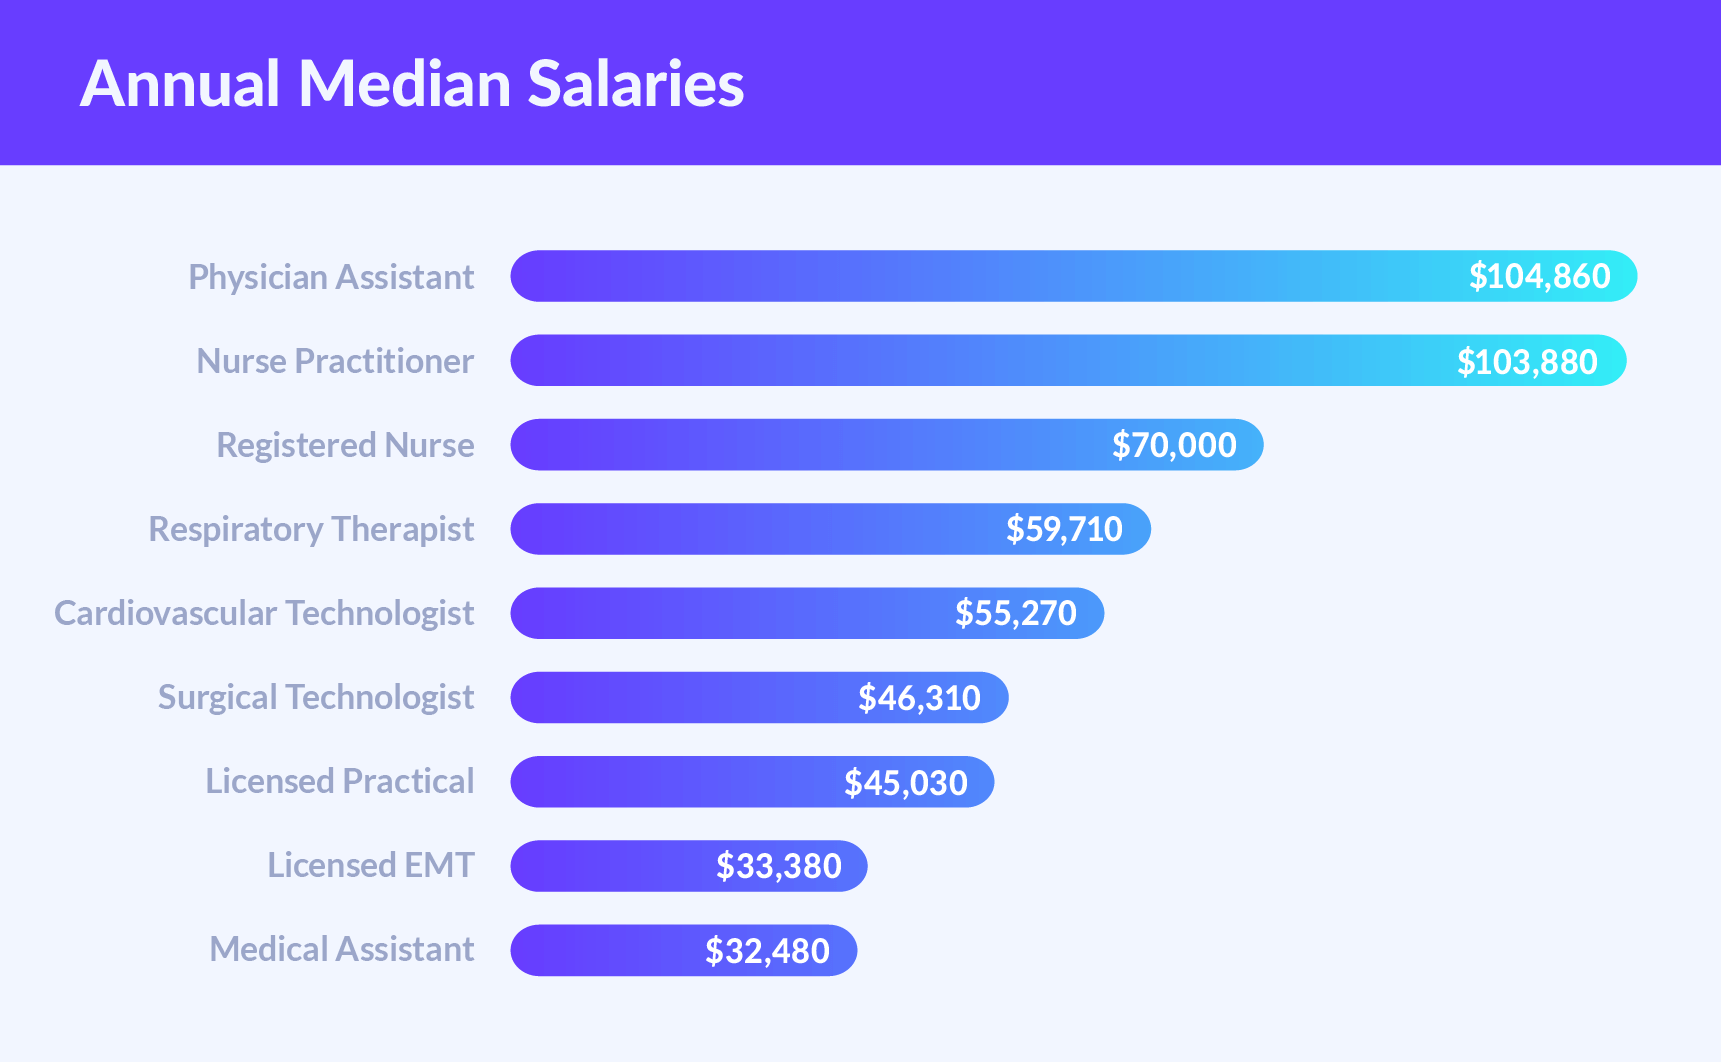 medical writer jobs phd salary